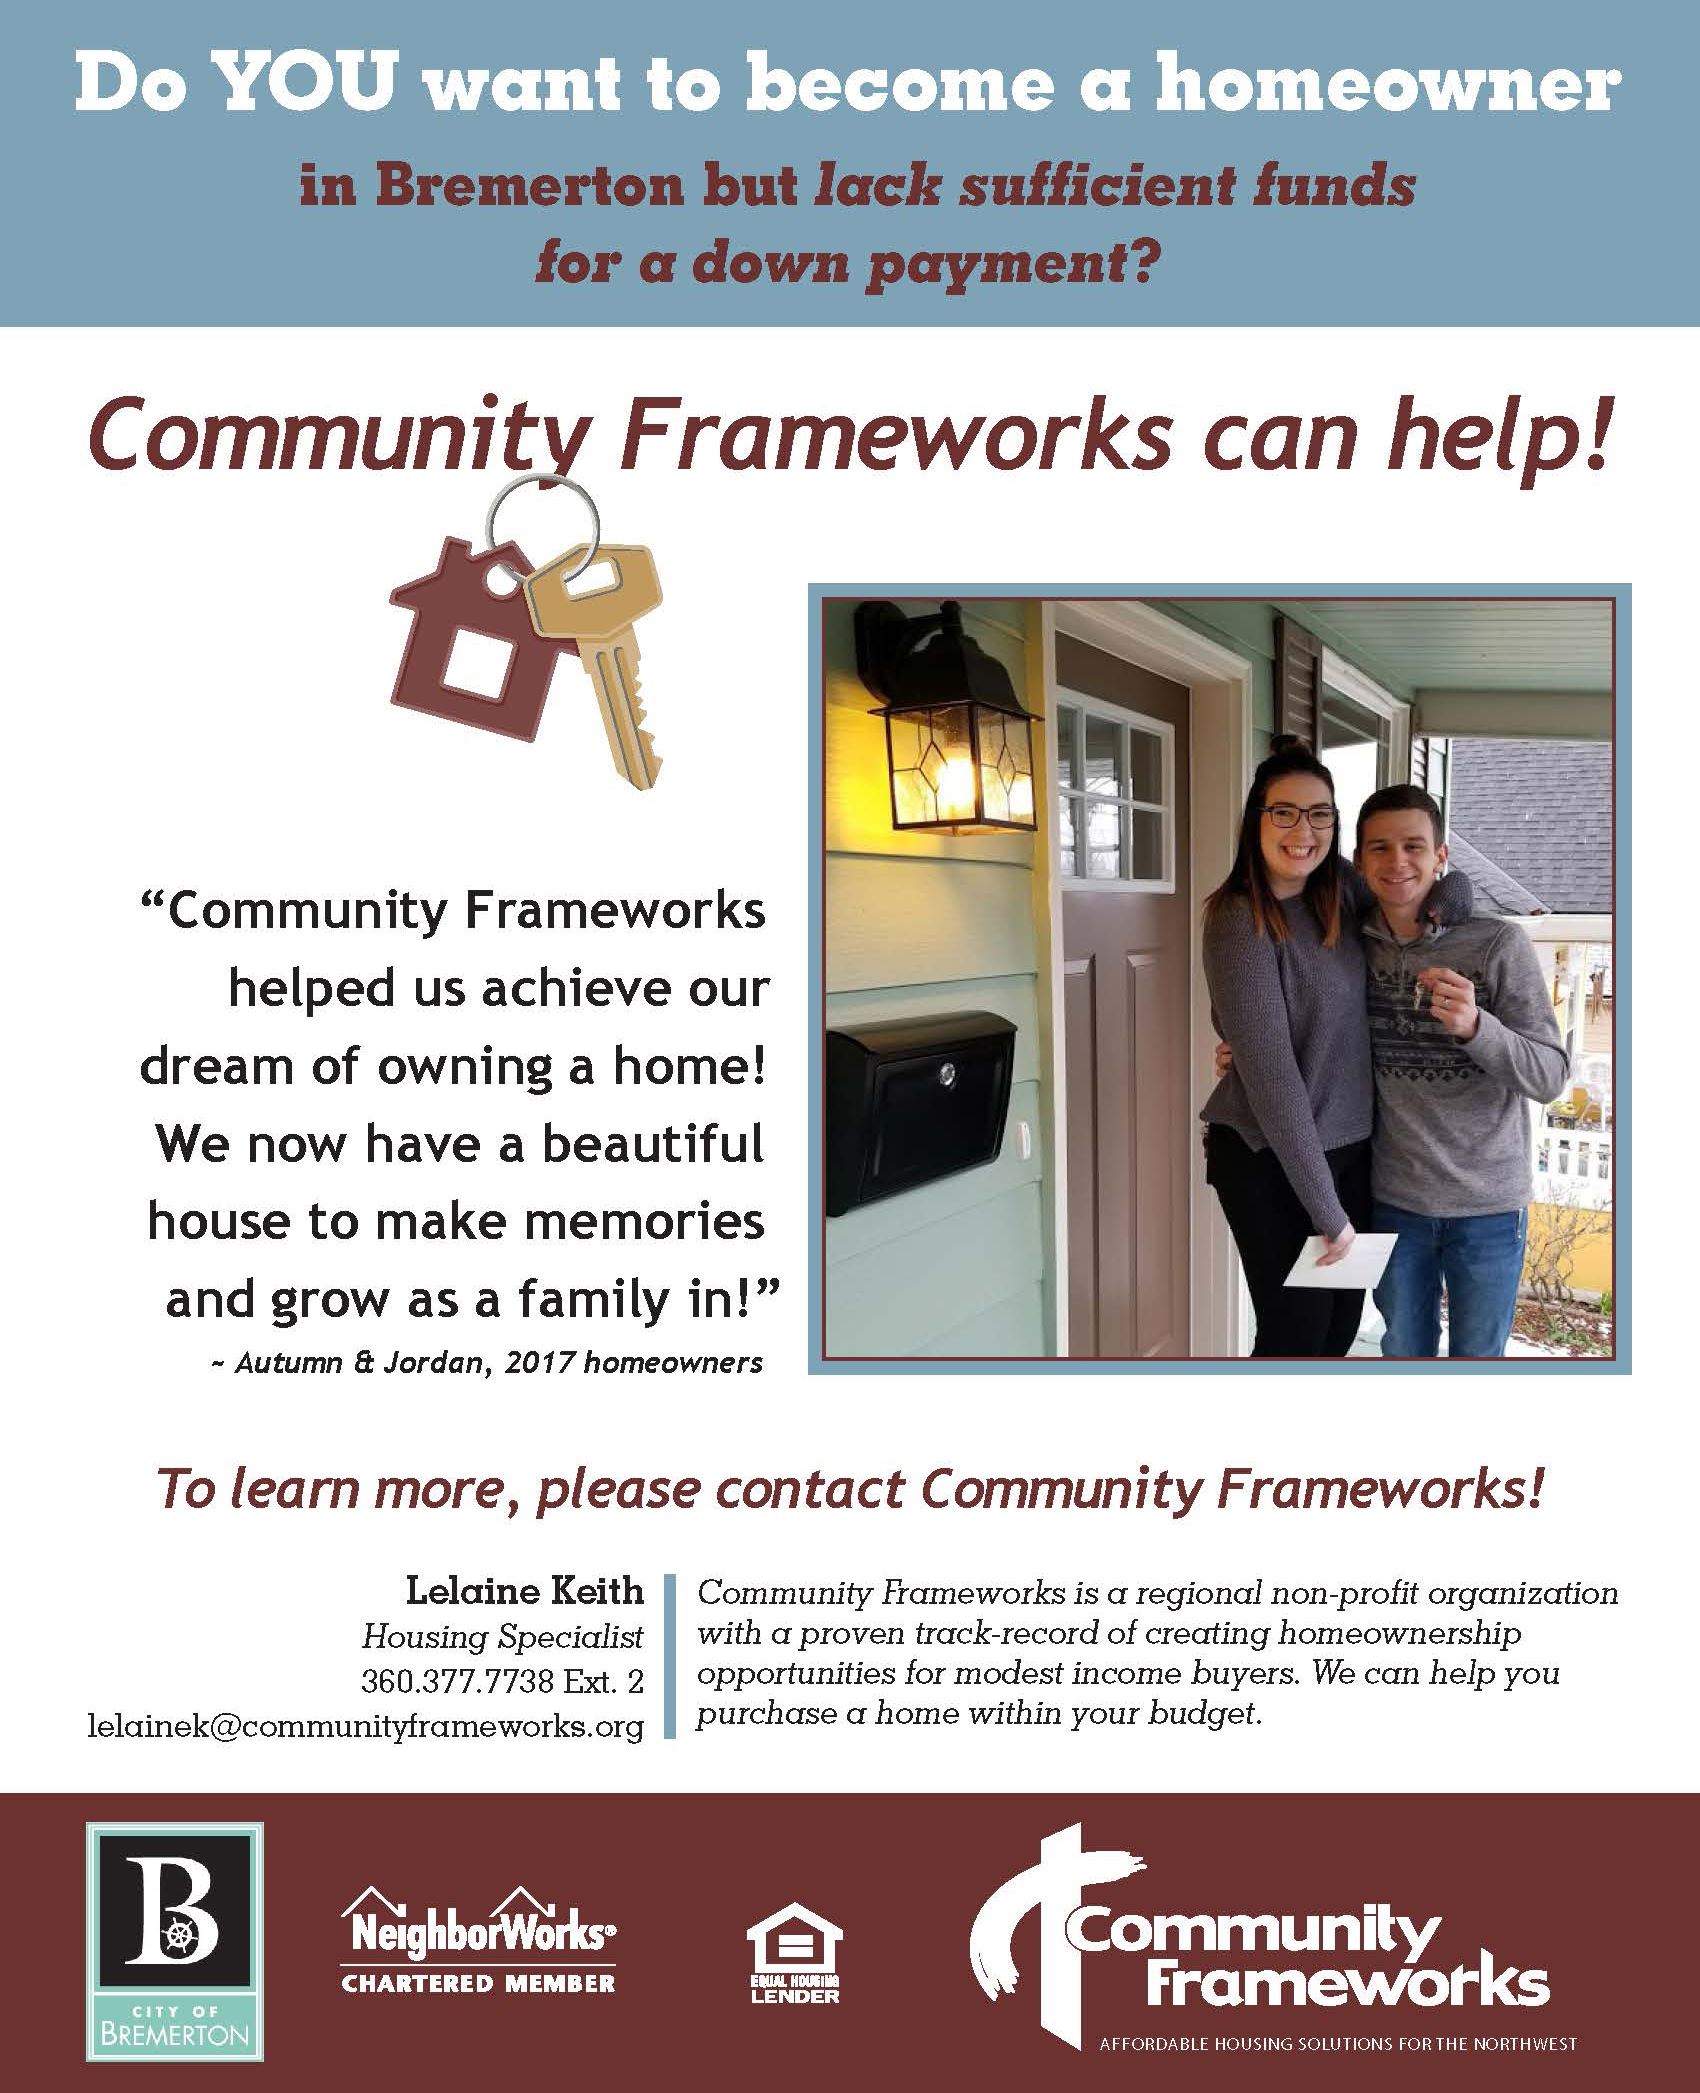 Bremerton Homeownership Program